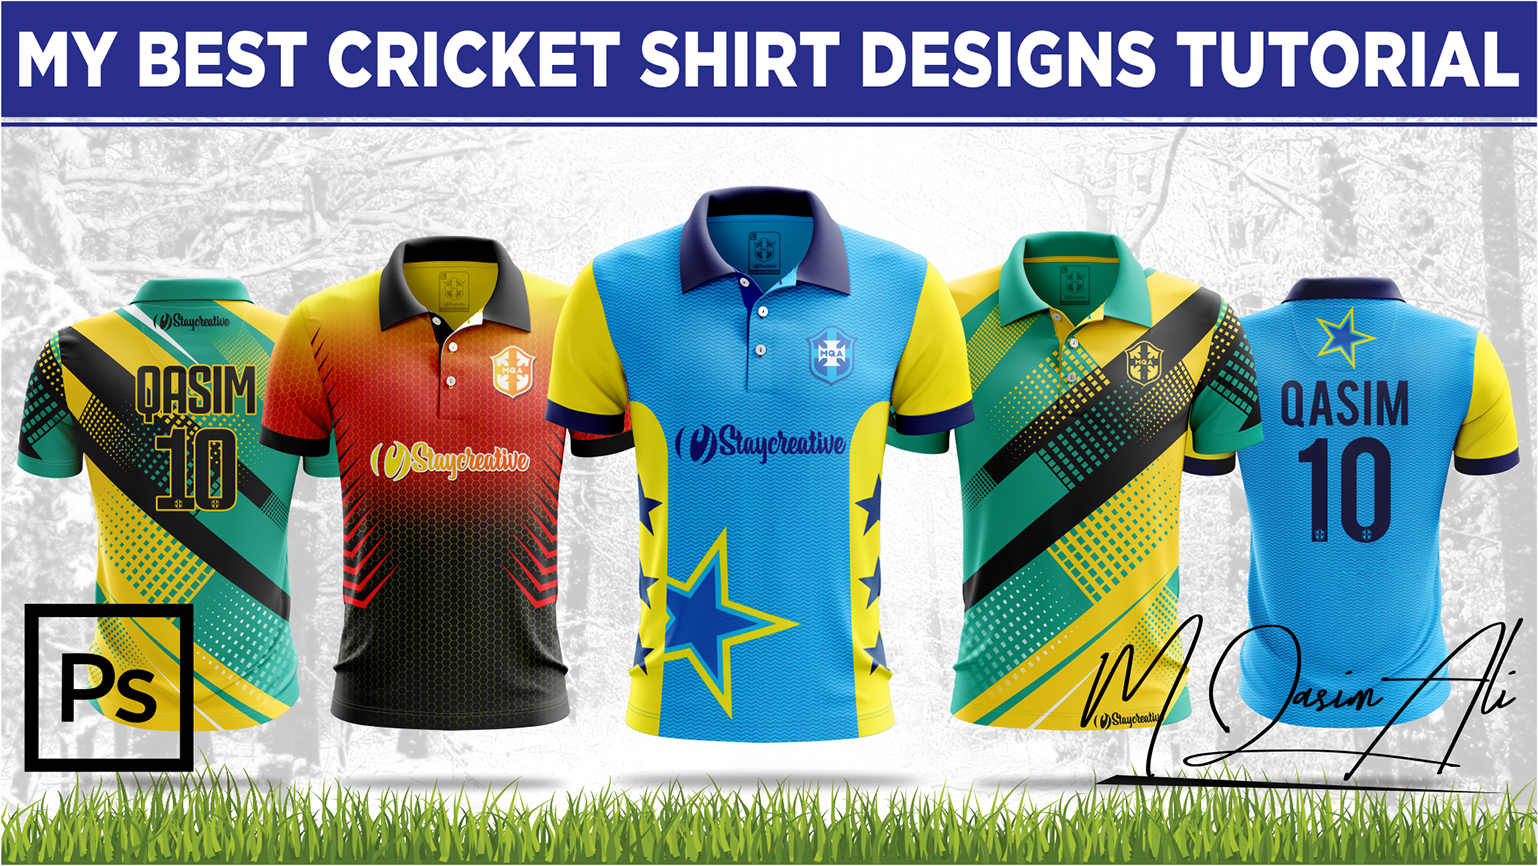 new cricket jersey design 2020